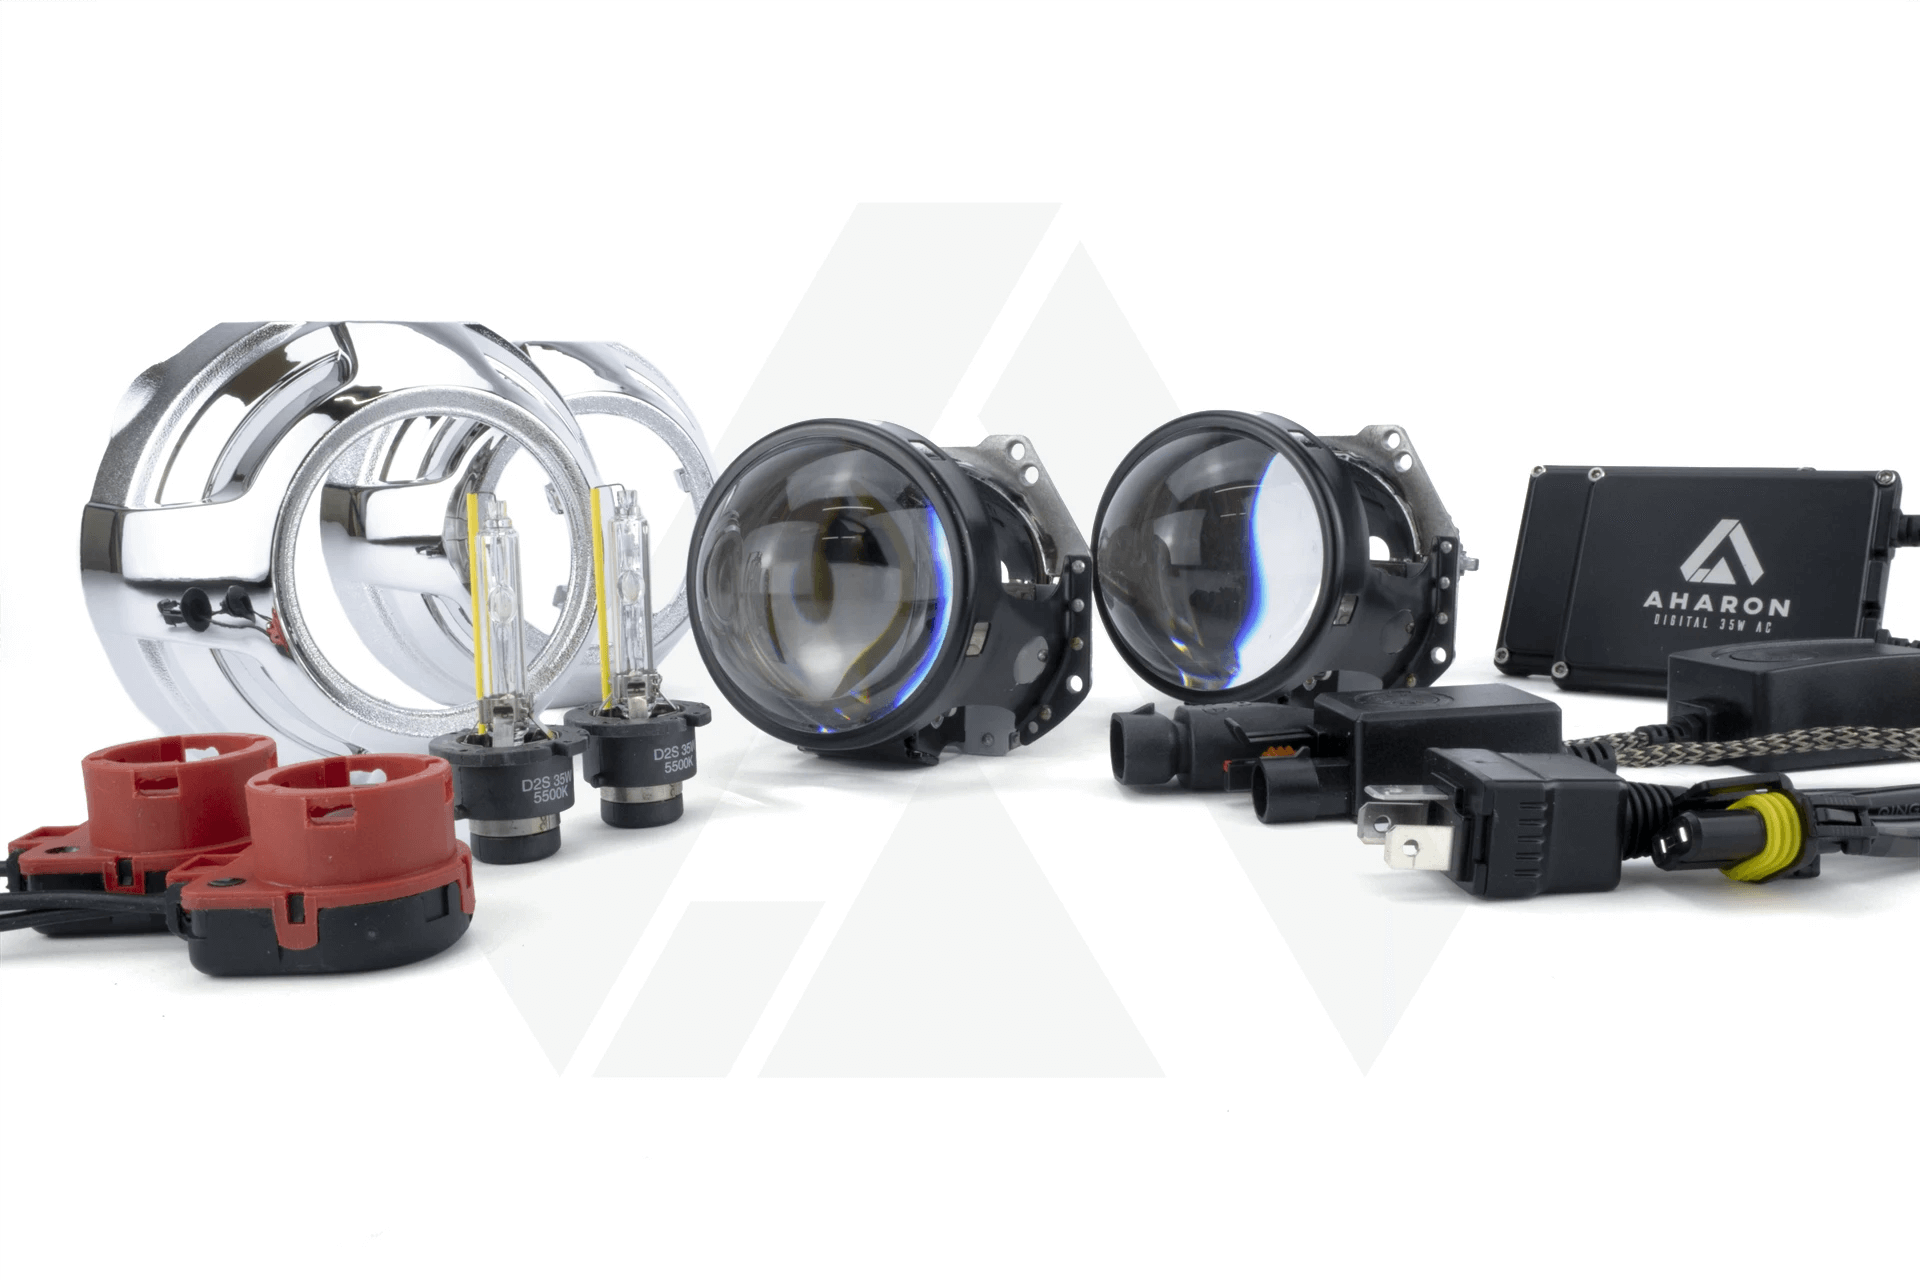 Opel Vivaro 06-14 bi-xenon HID projector headlight repair & upgrade kit